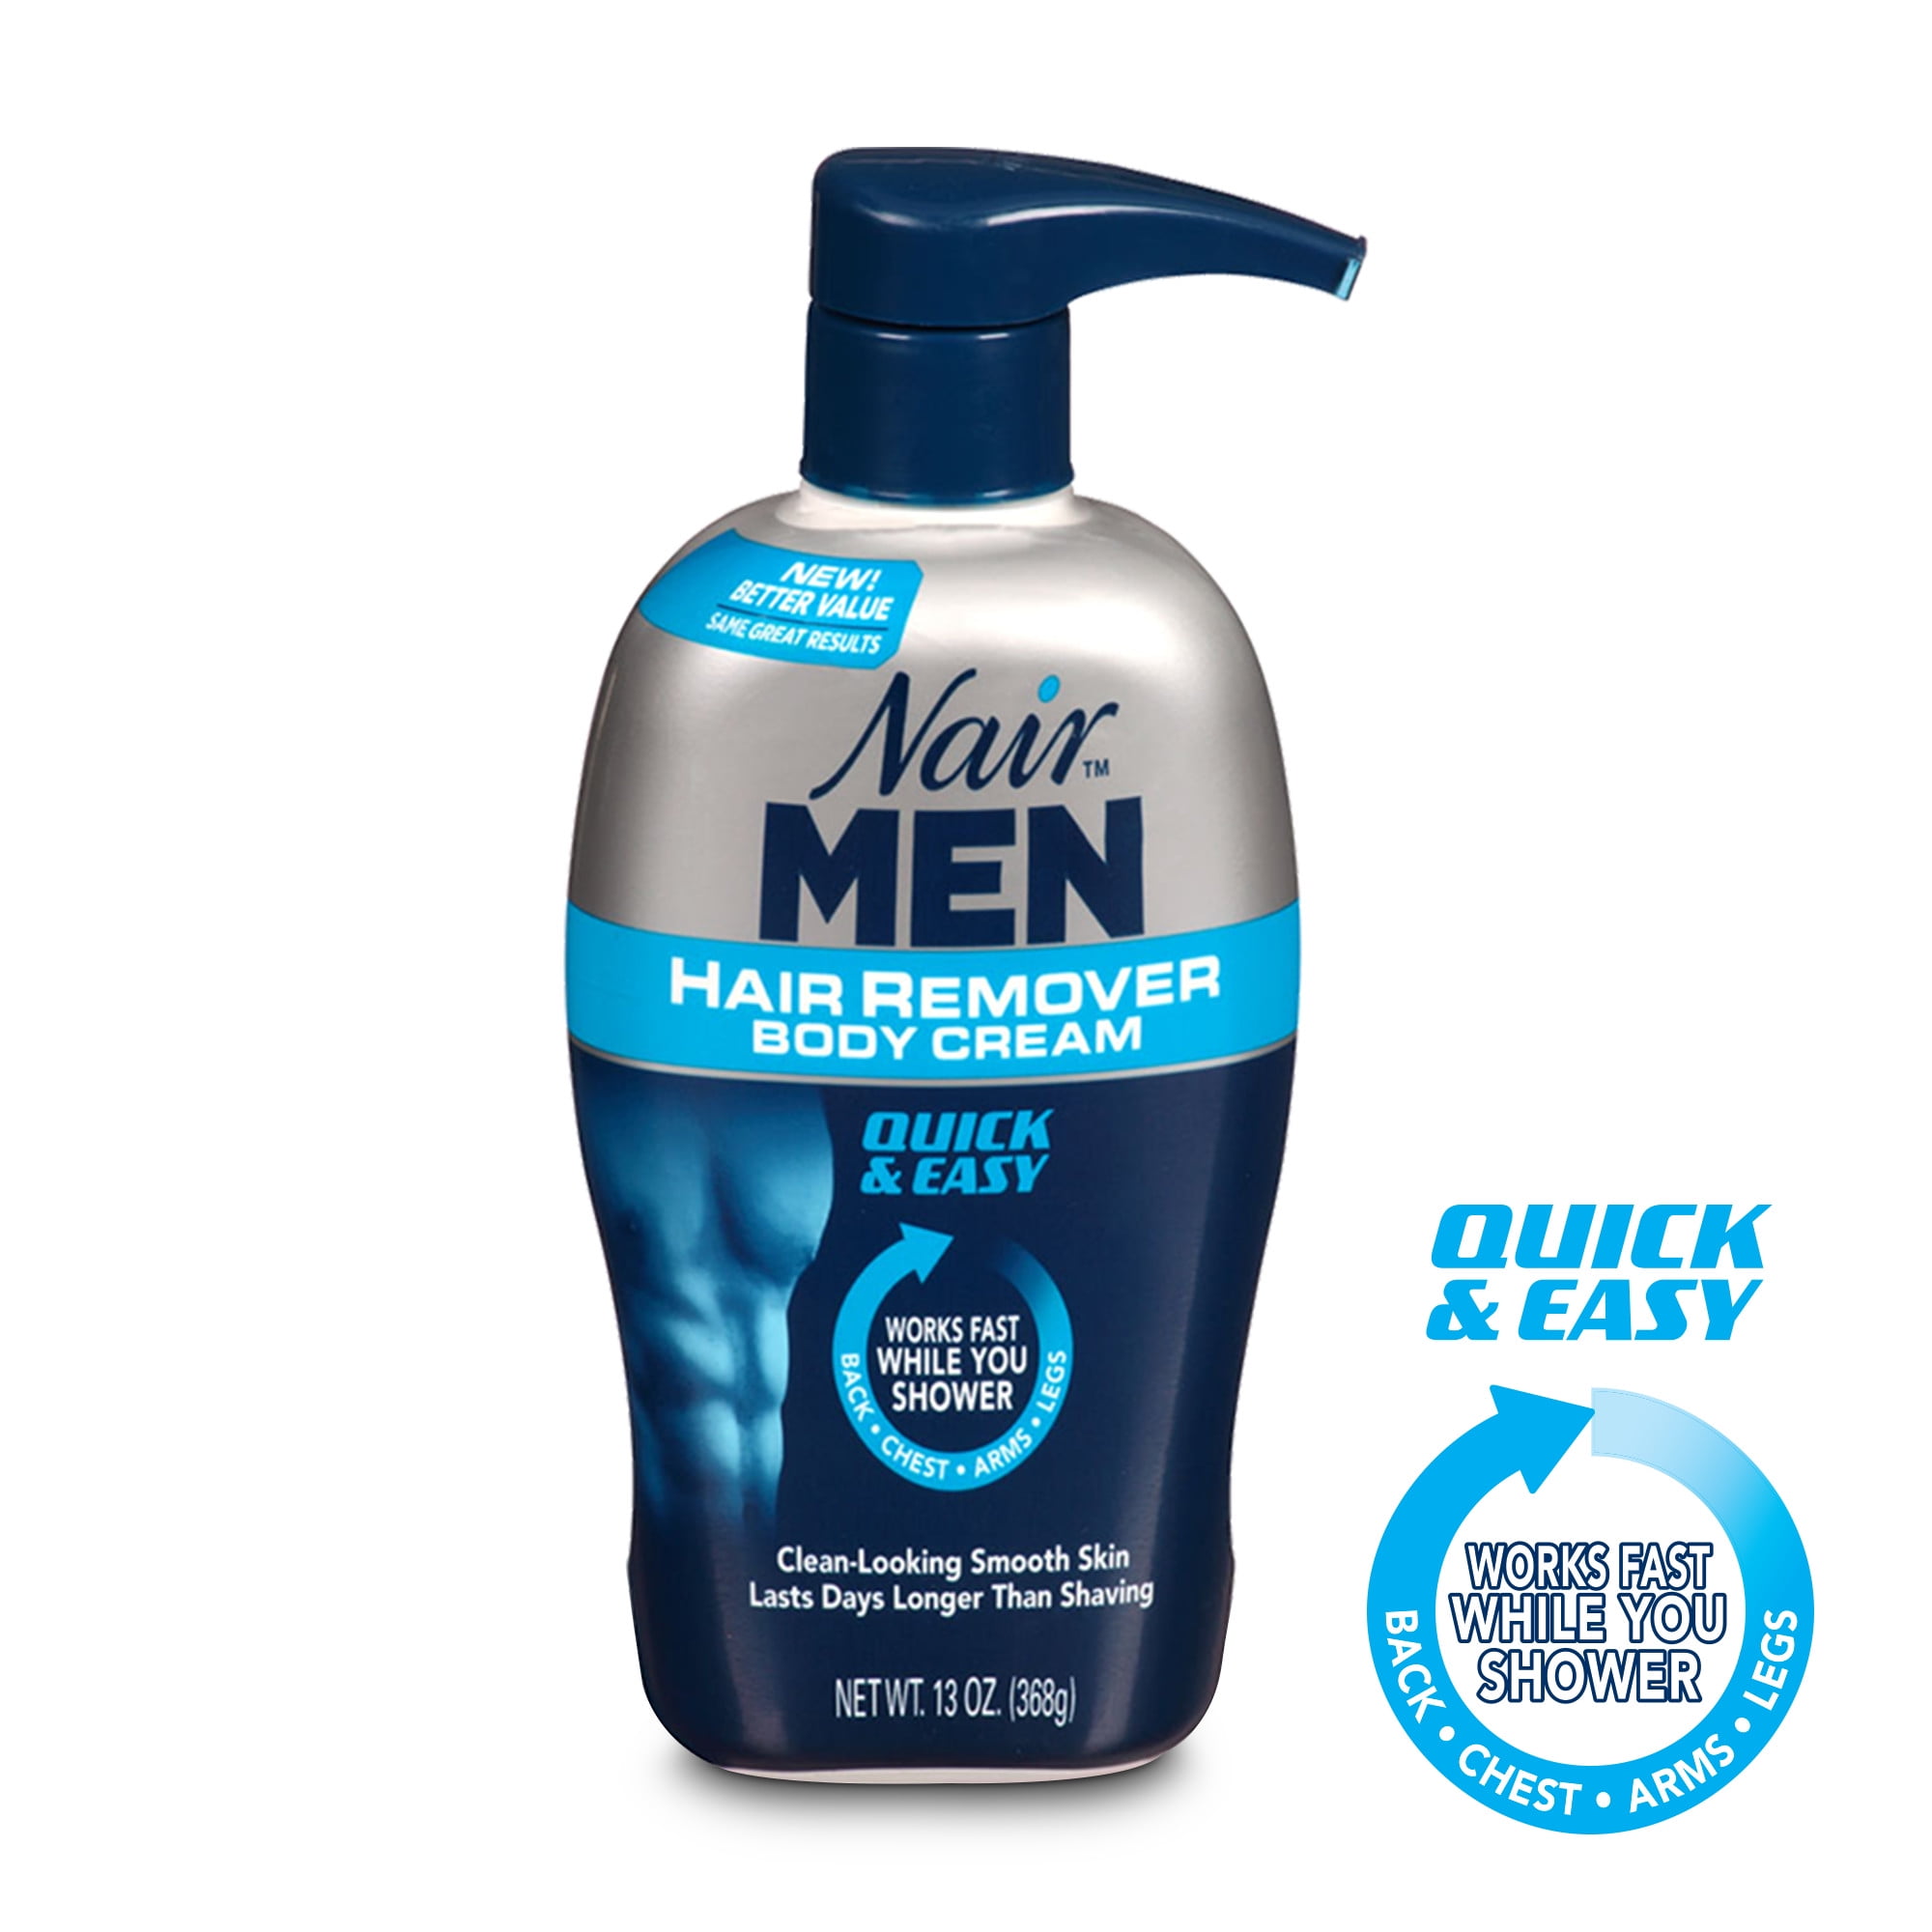 Hair removal cream for men- Nair Men